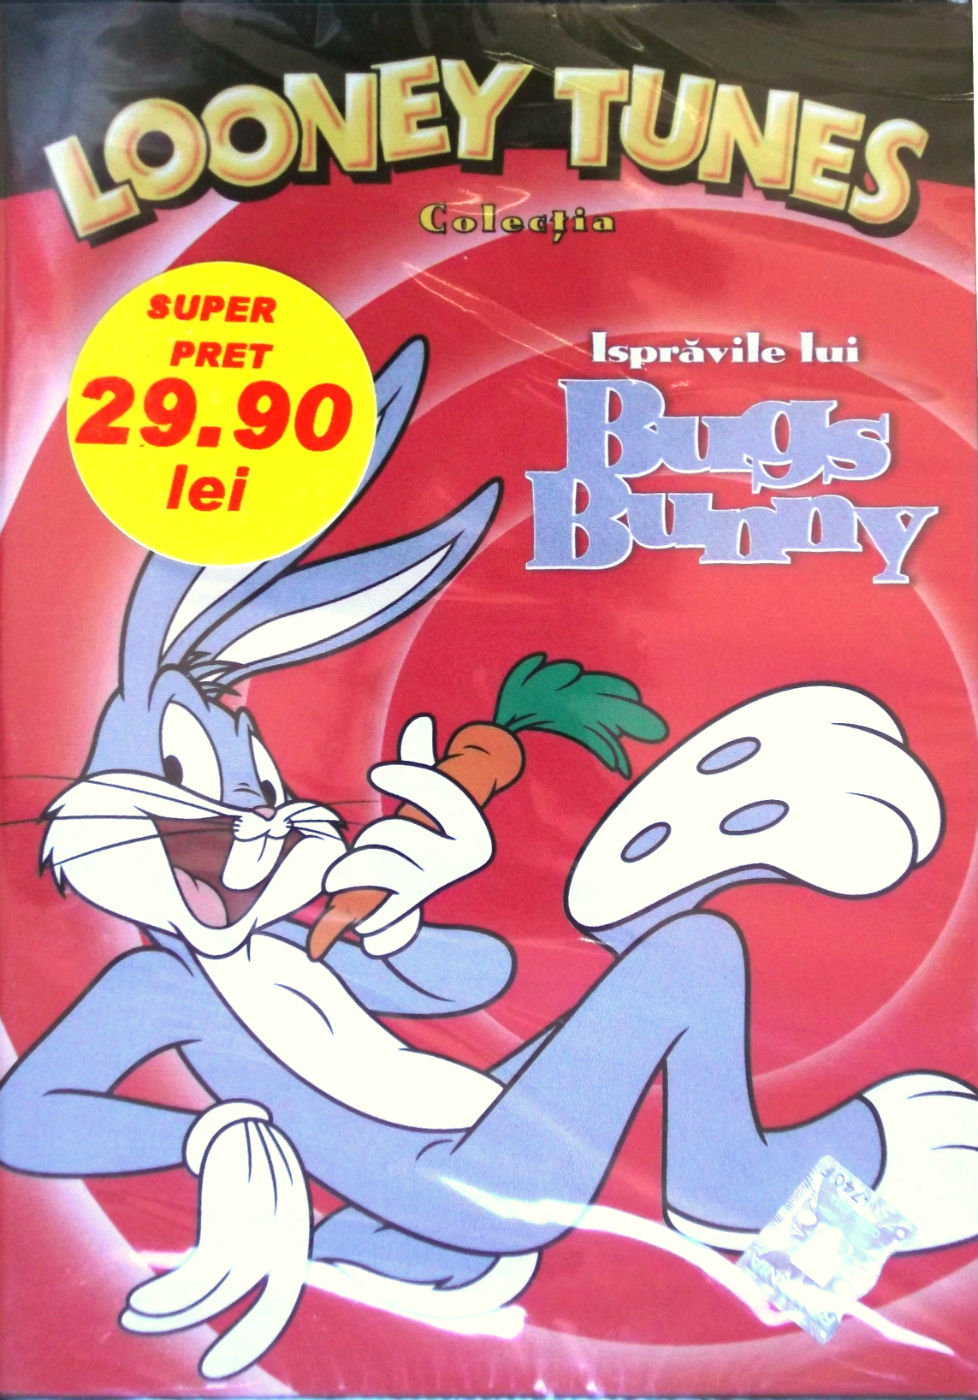 DVD Looney Tunes - Ispravile lui Bugs Bunny